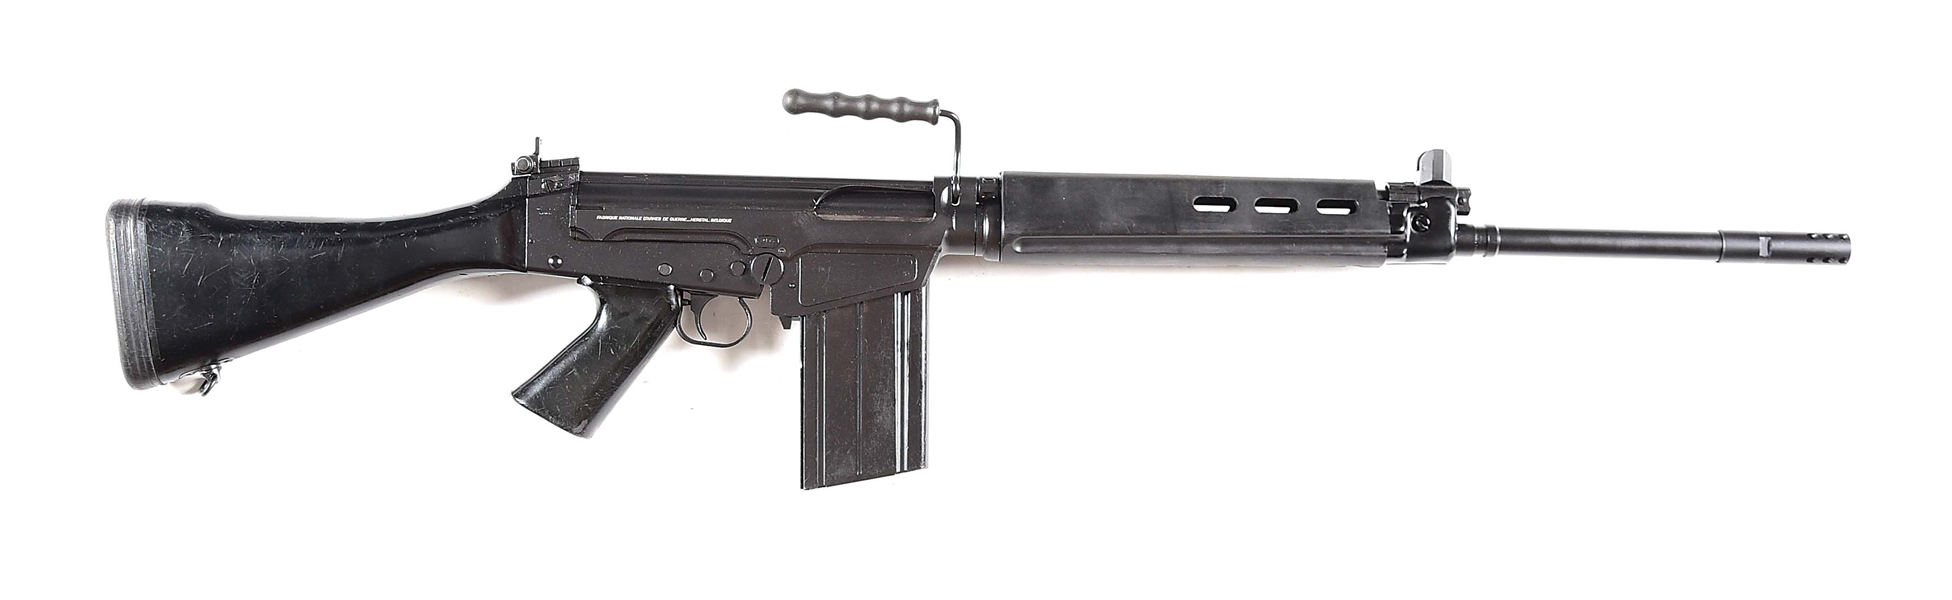 (N) HIGH CONDITION ORIGINAL BELGIAN FN HERSTAL FN-FAL MACHINE GUN WITH ISRAELI MARKS (PRE-86 DEALER SAMPLE).